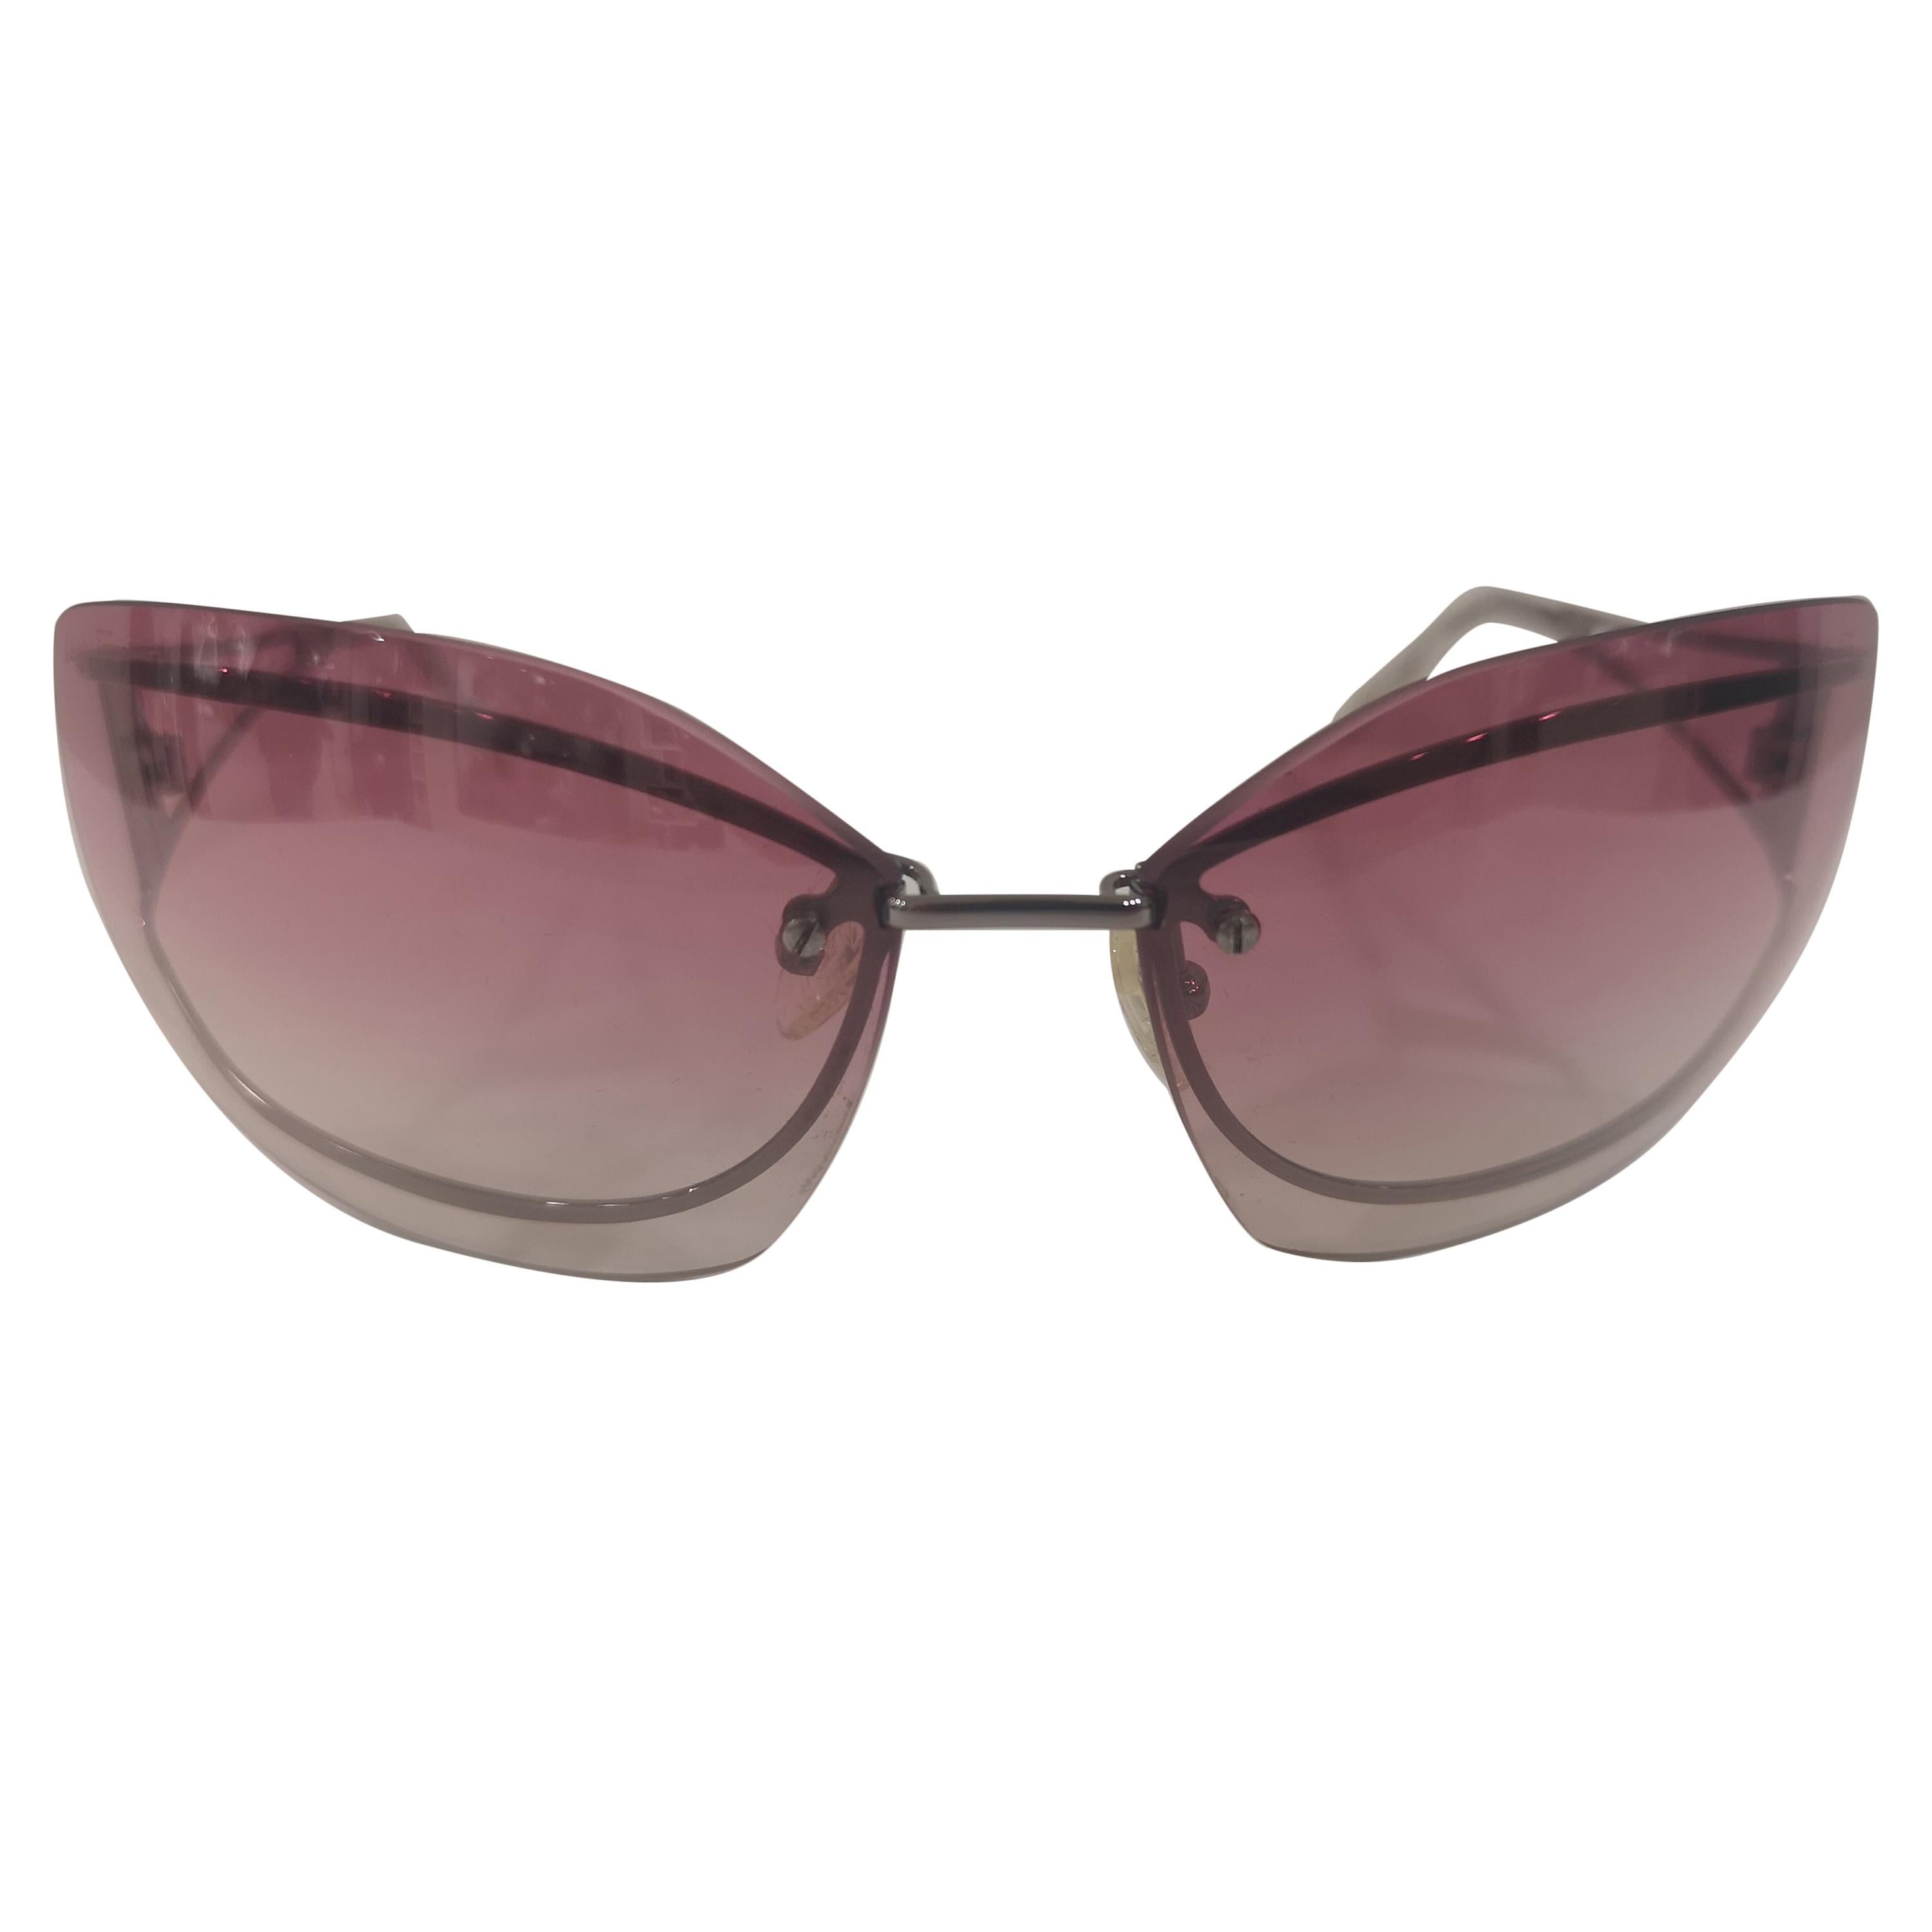 Salvatore Ferragamo pink sunglasses NWOT